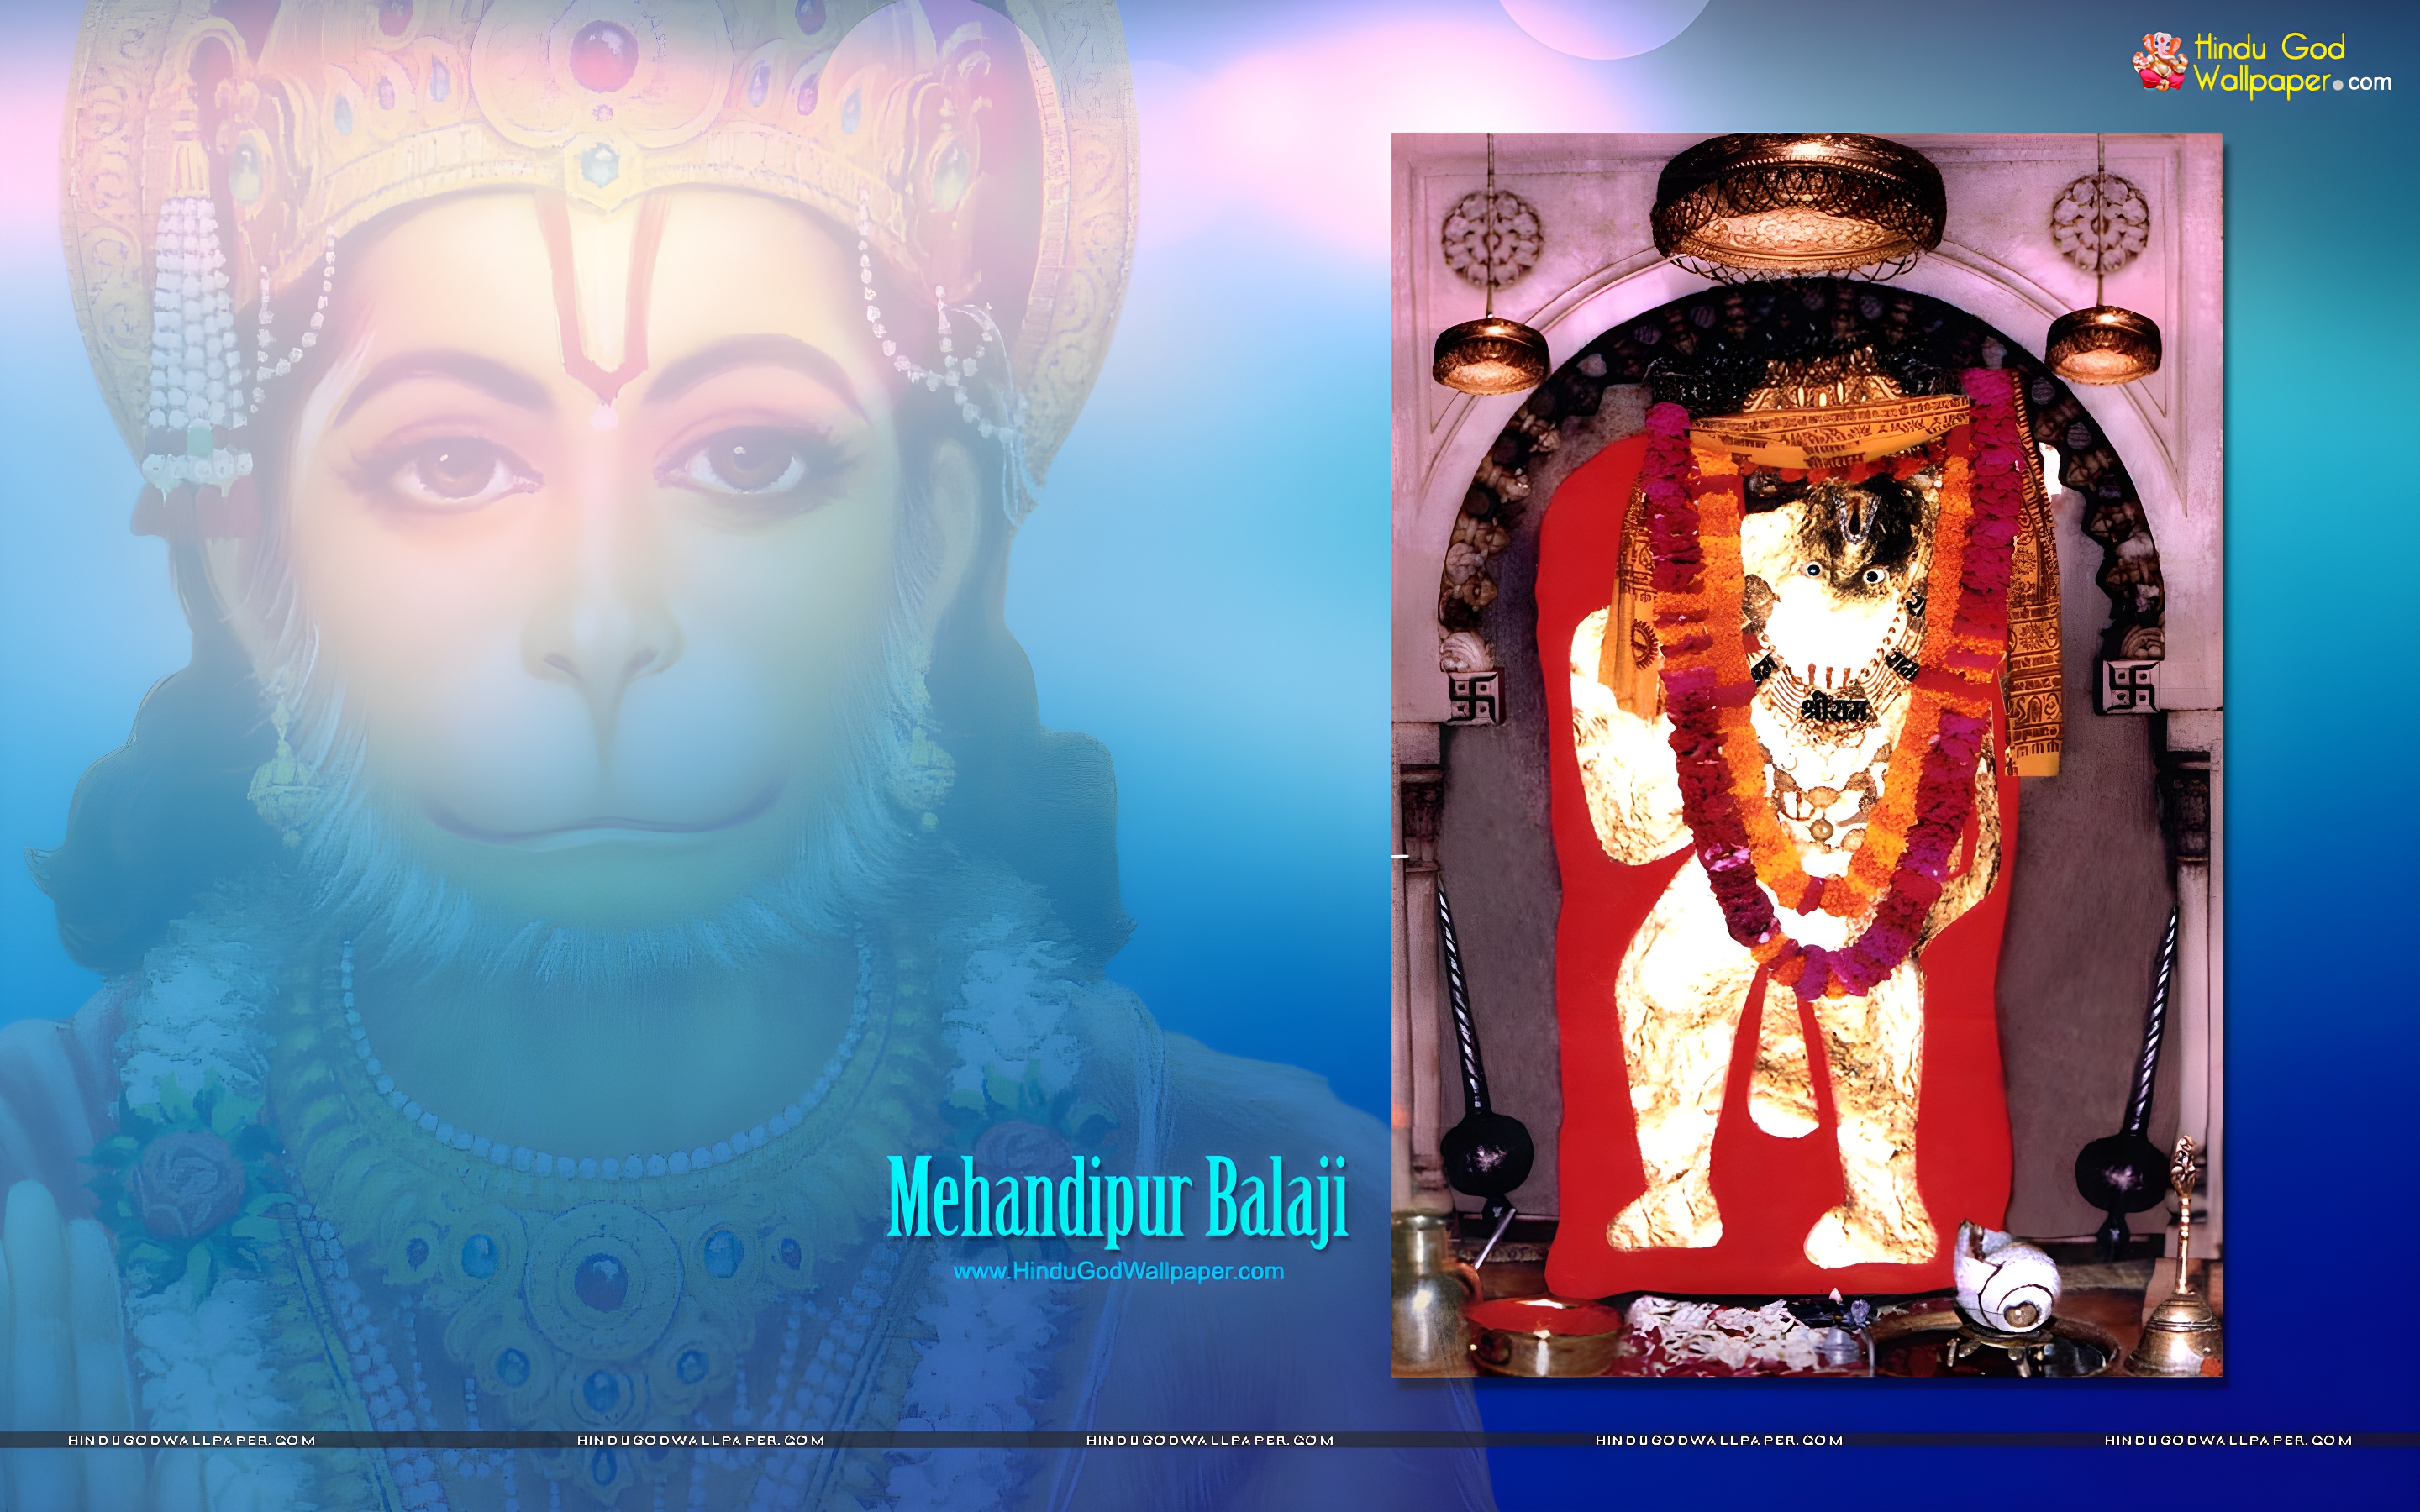 Mehandipur Balaji - lord balaji